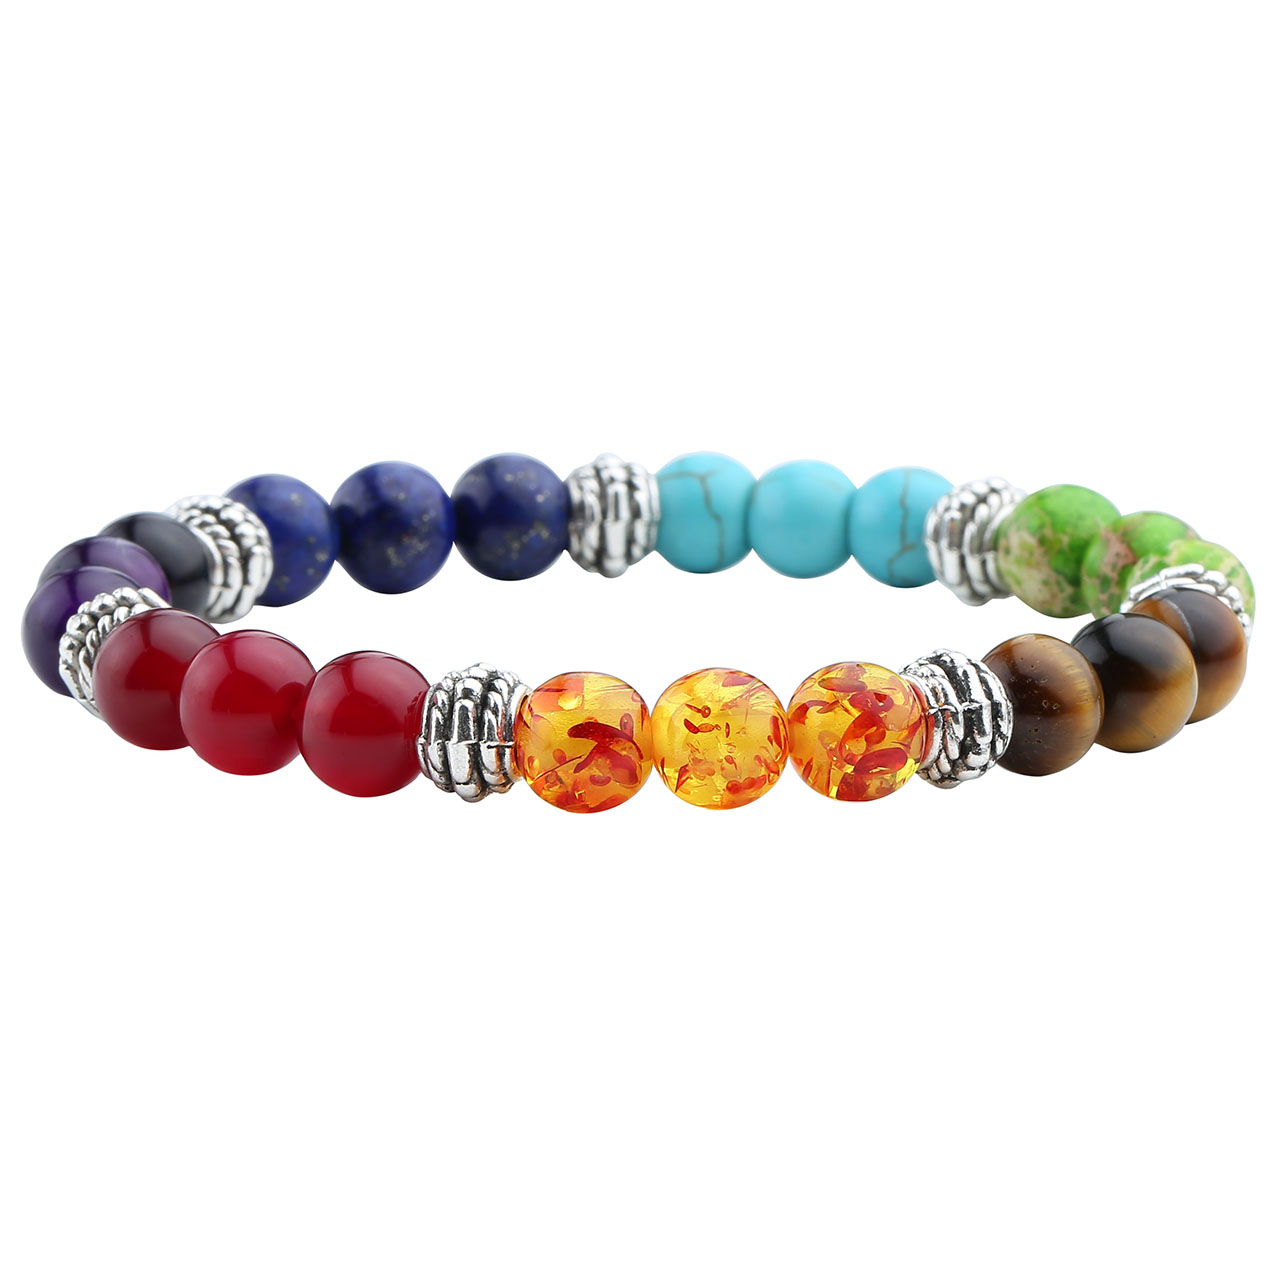 Top Plaza 7 Chakra Healing Crystal 8mm Gemstone Beads Meditation Energy Natural Stone Stretch Bracelet